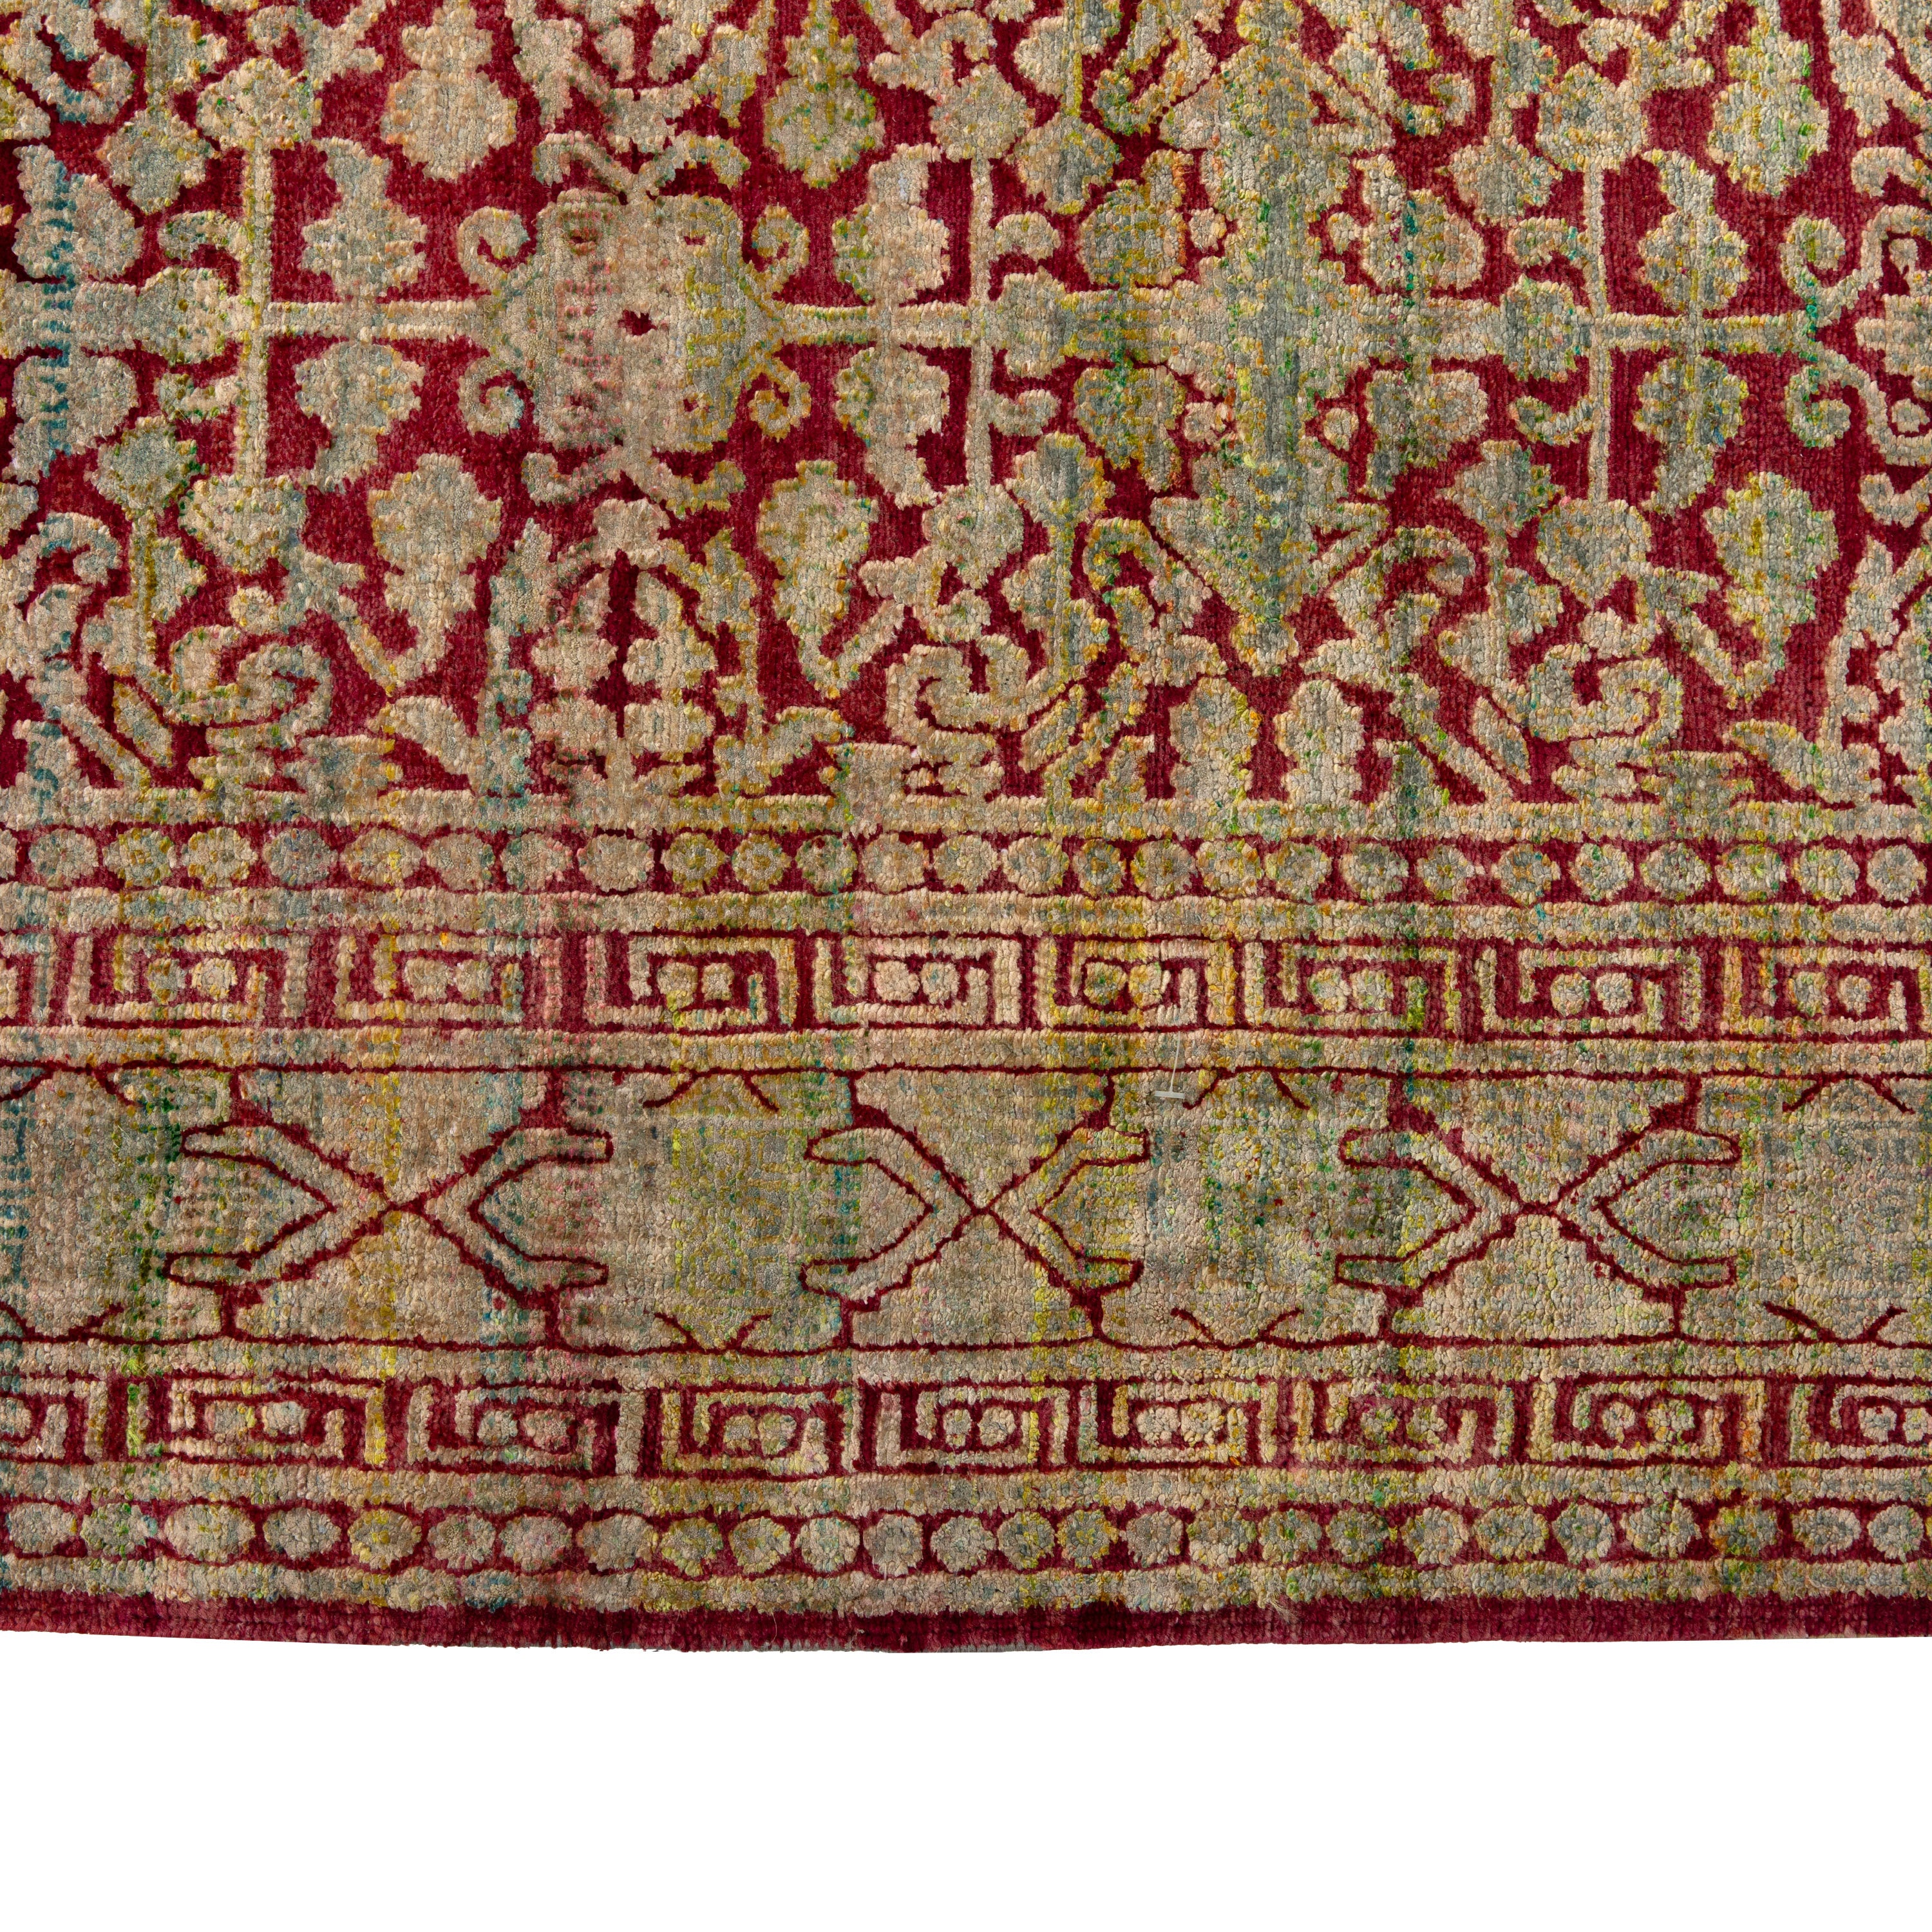 Yellow Transitional Wool Silk Blend Rug - 7'10" x 11'3"